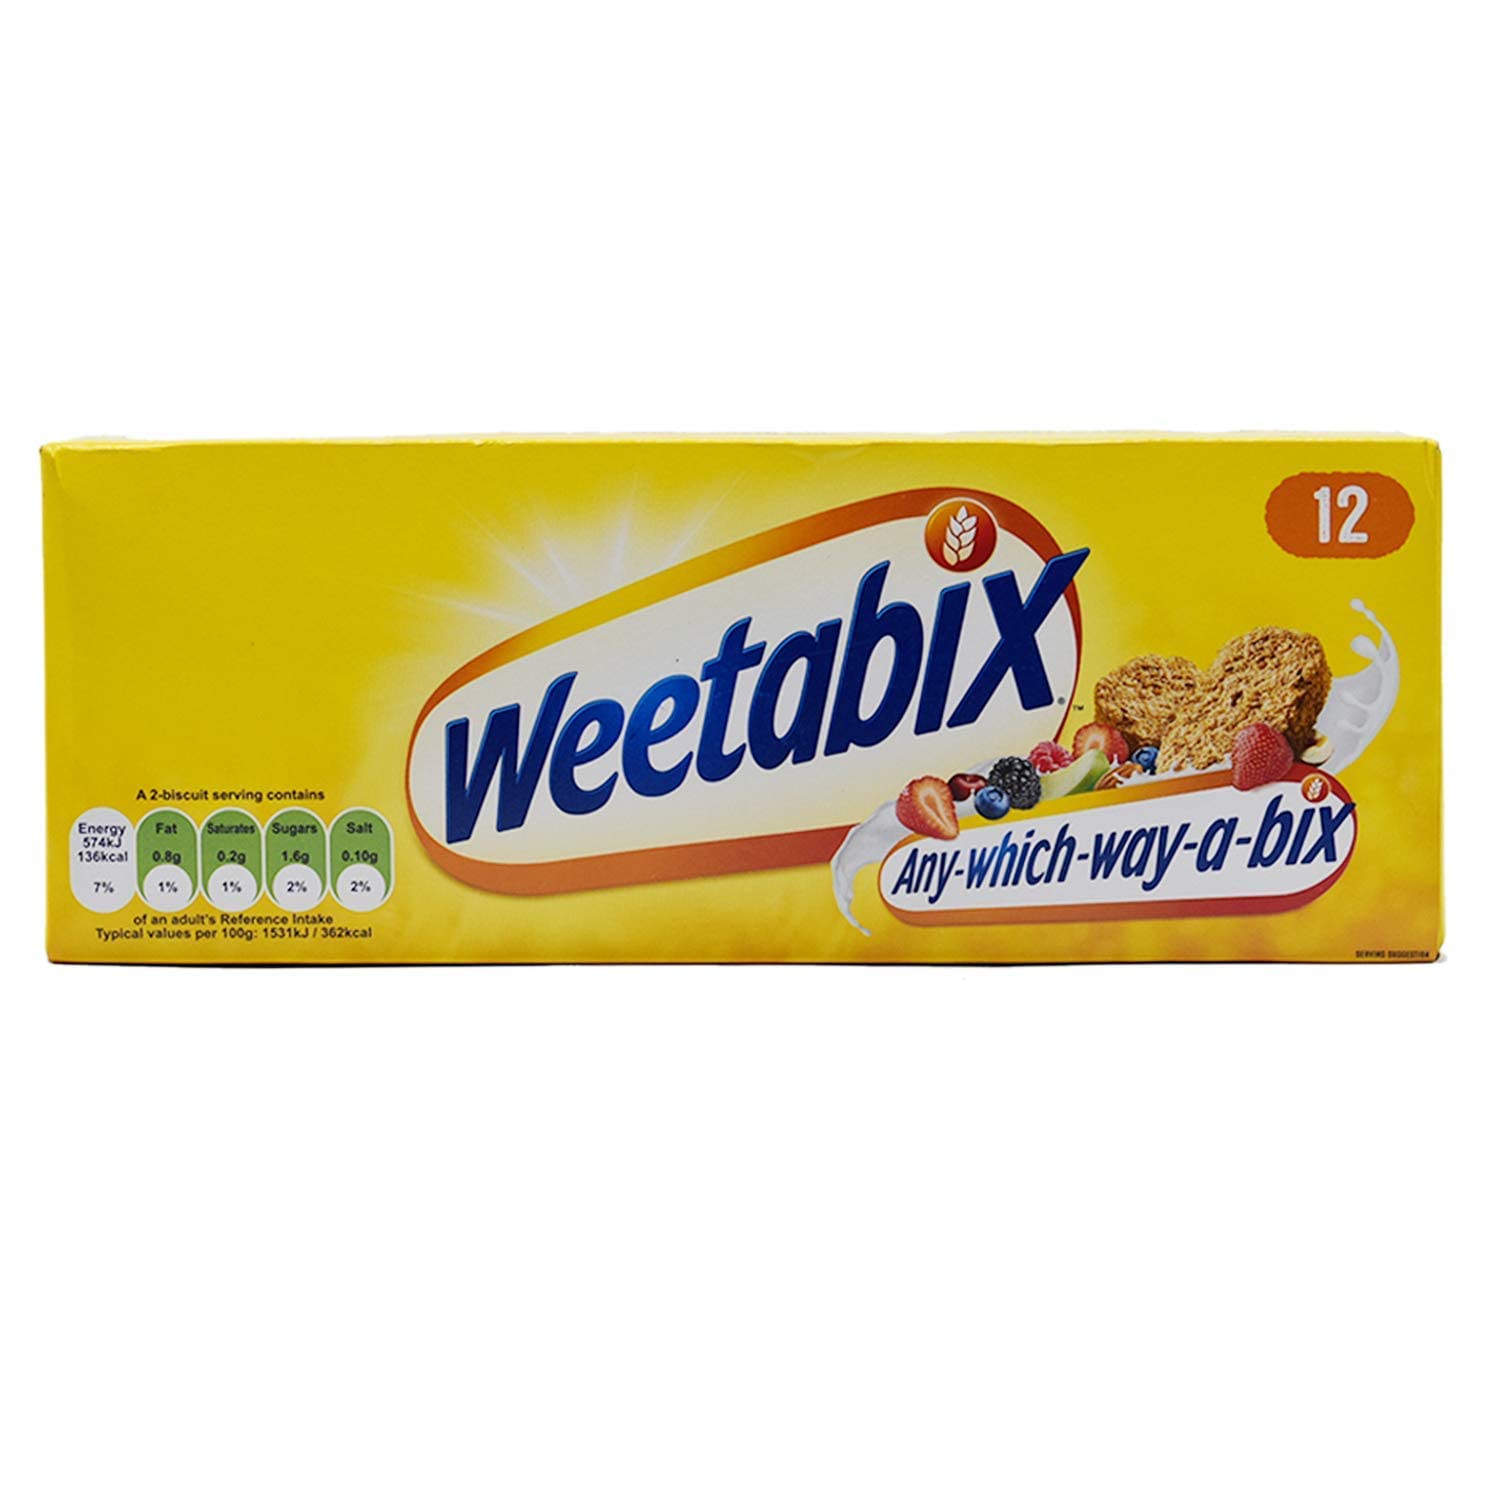 Weetabix Biscuit Cereal Whole Grain 2 Count - 14 Oz